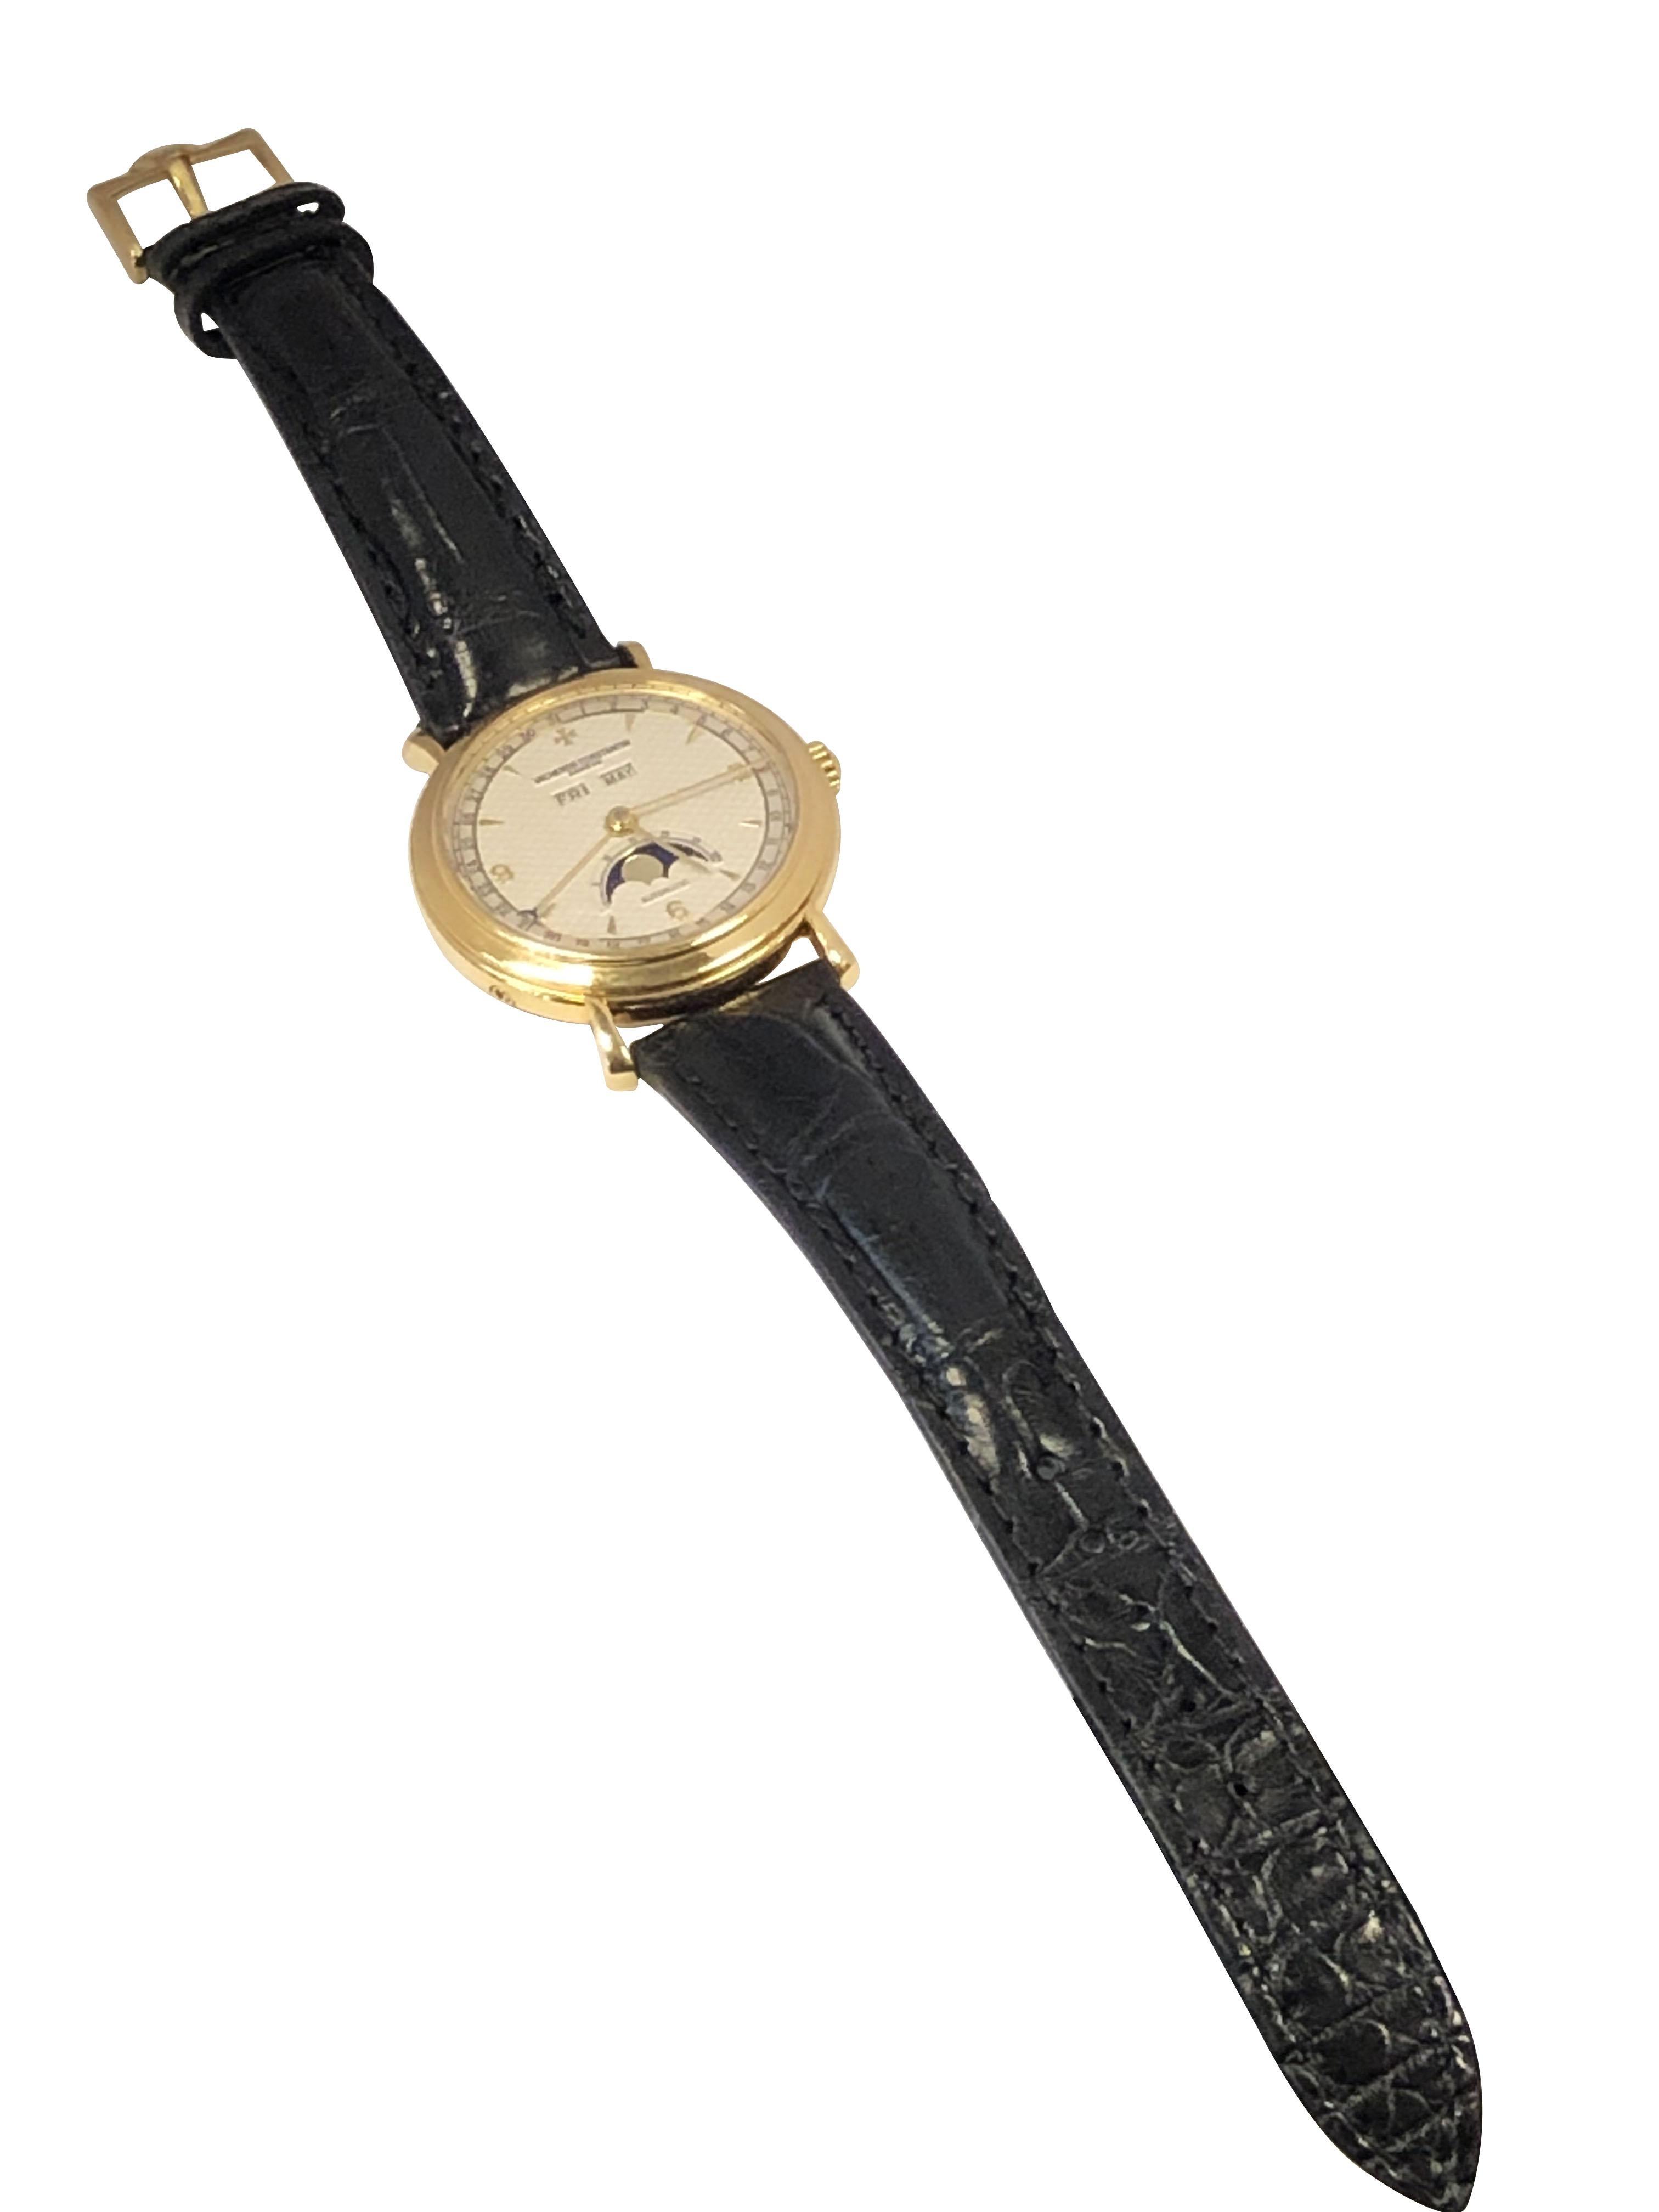 Vacheron Constantin Moonphase Triple Calendar Yellow Gold Wrist Watch Ref 47050 For Sale 2